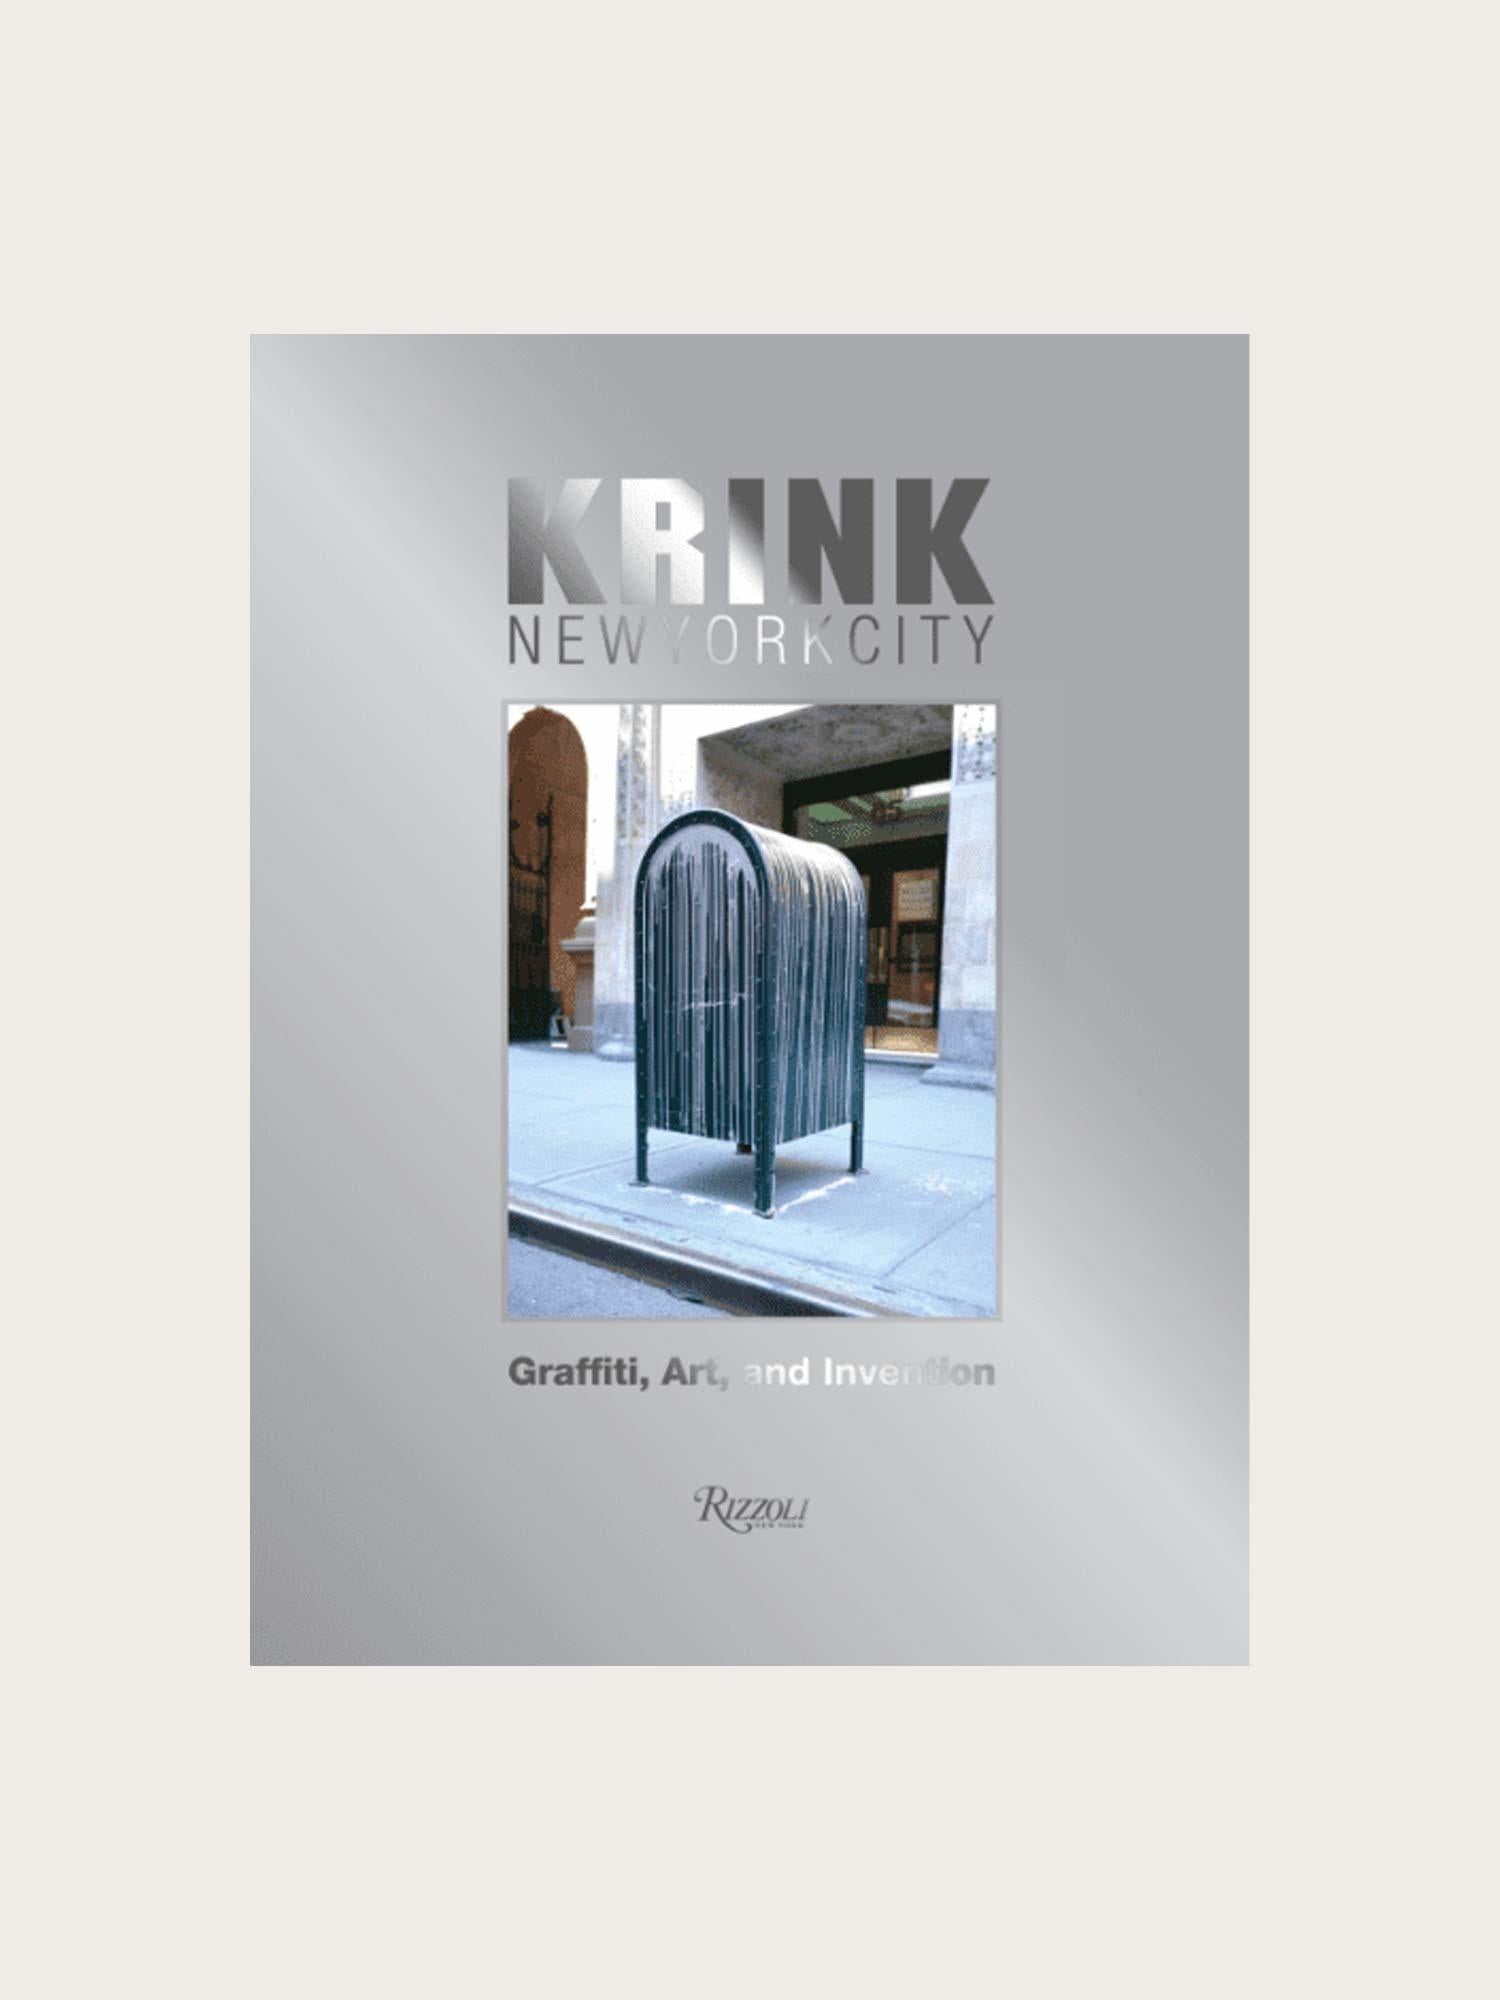 Krink - New York City